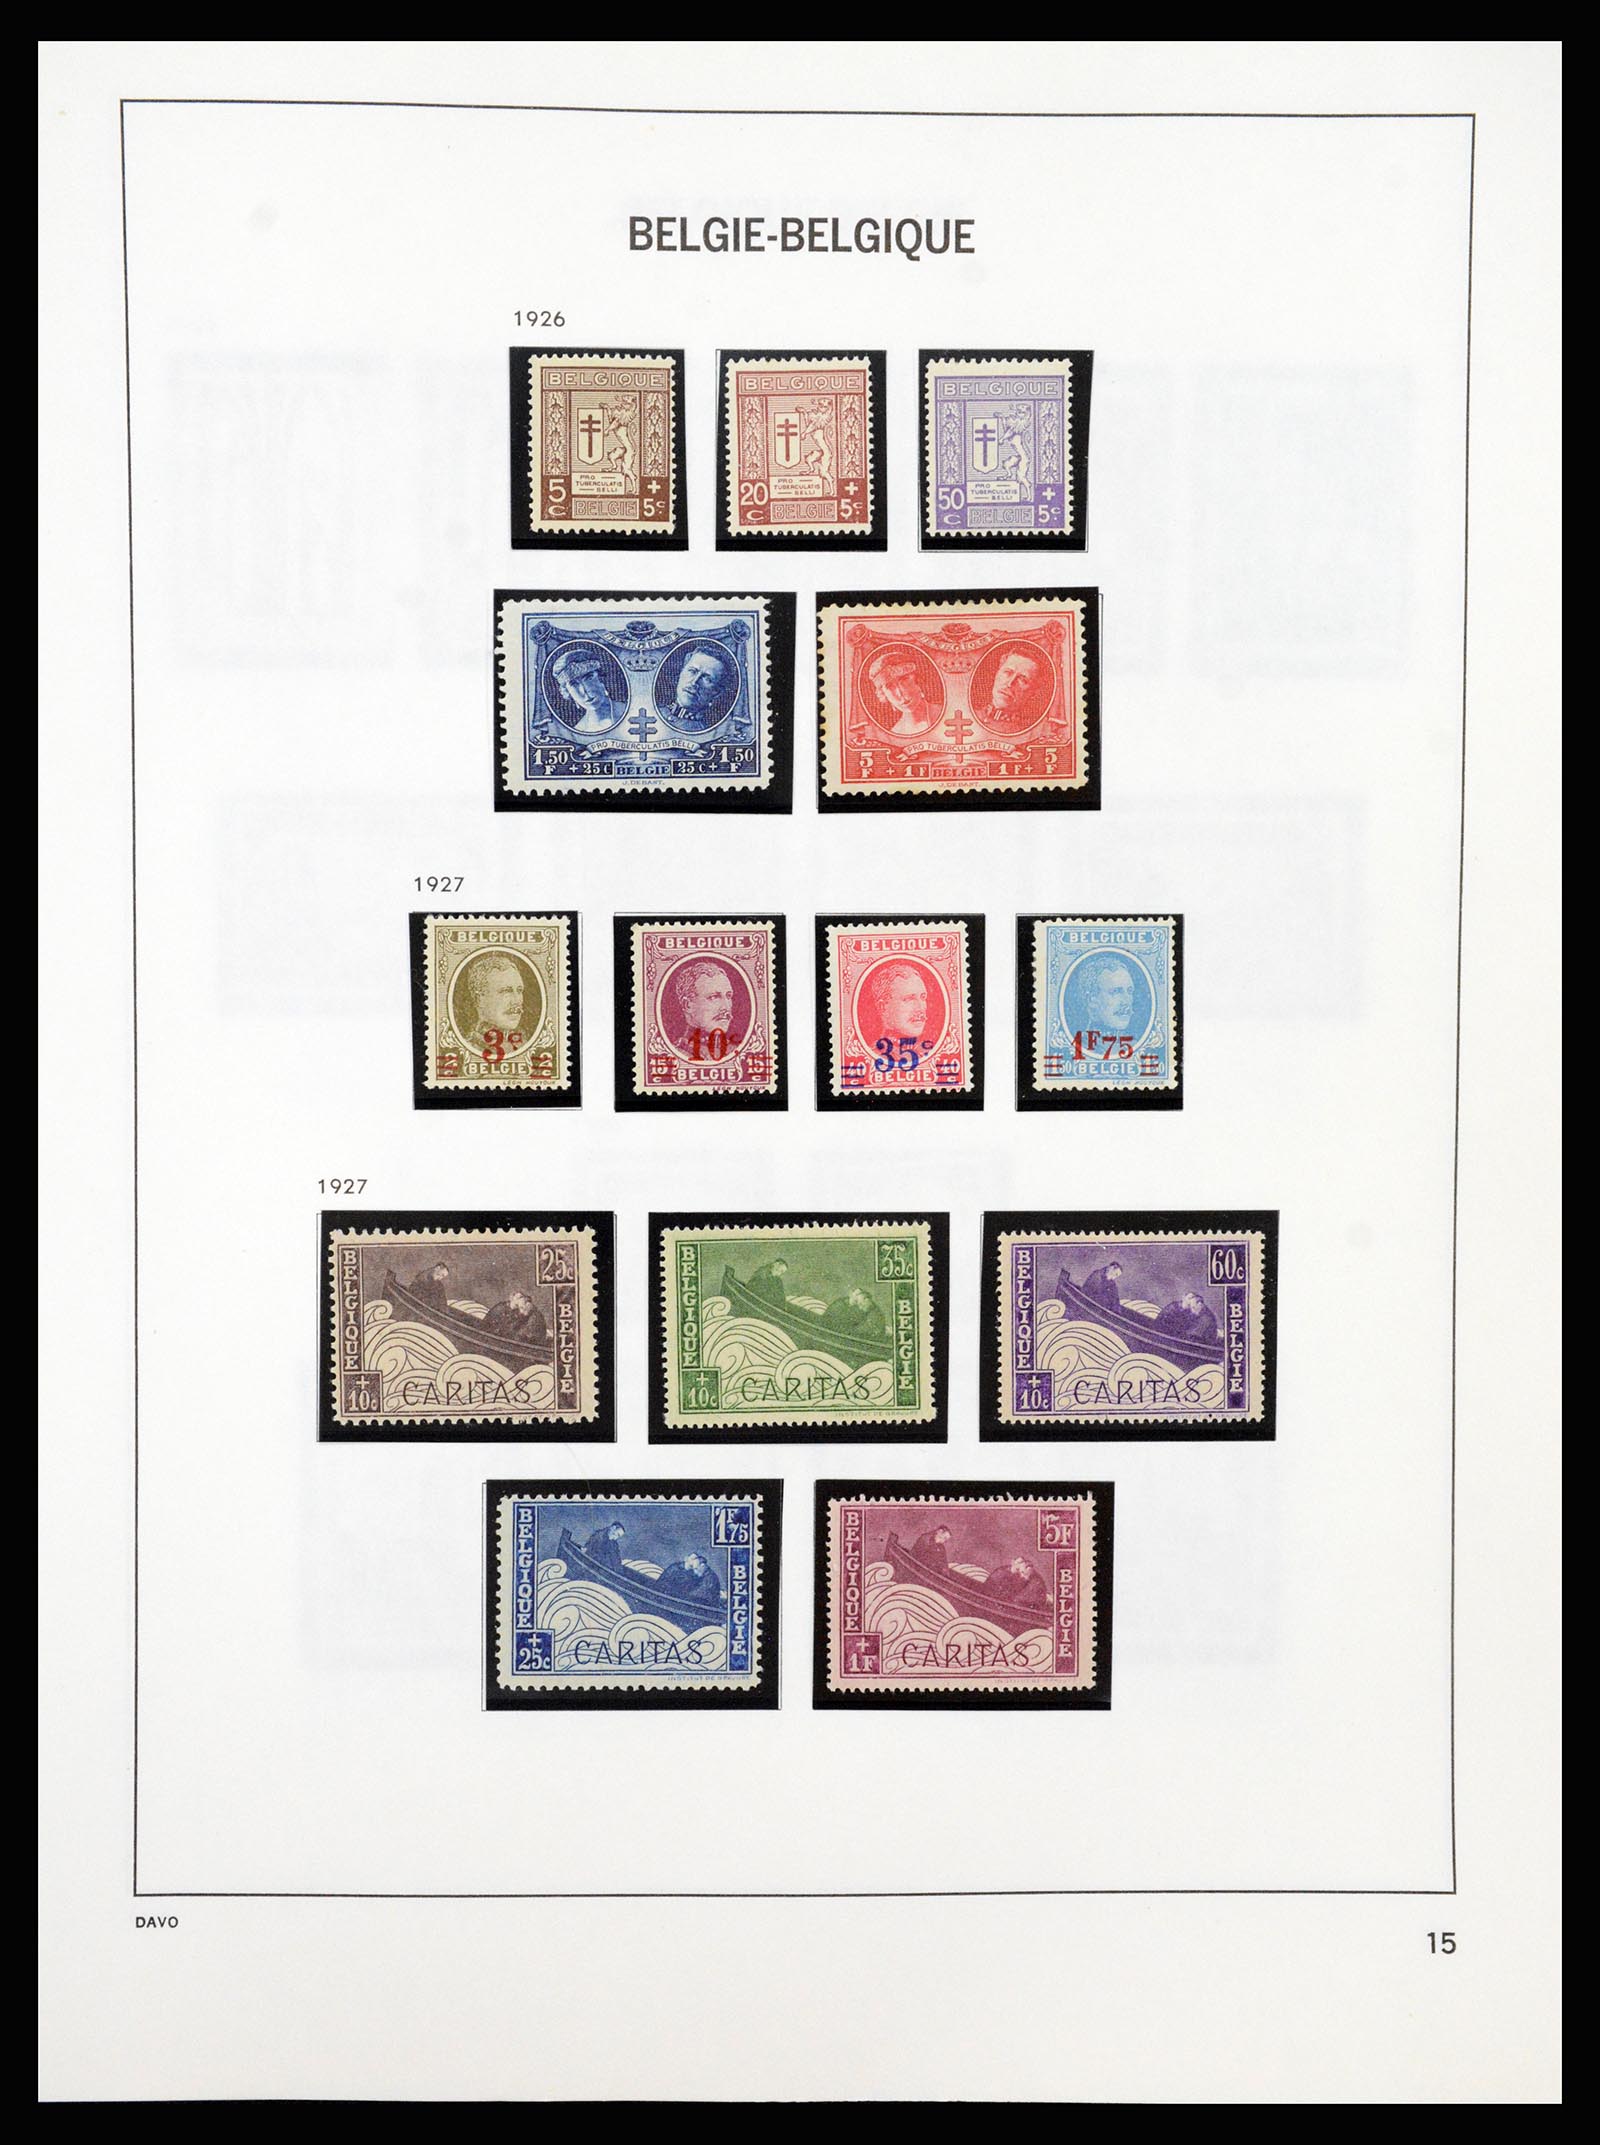 37189 015 - Stamp collection 37189 Belgium 1849-2006.